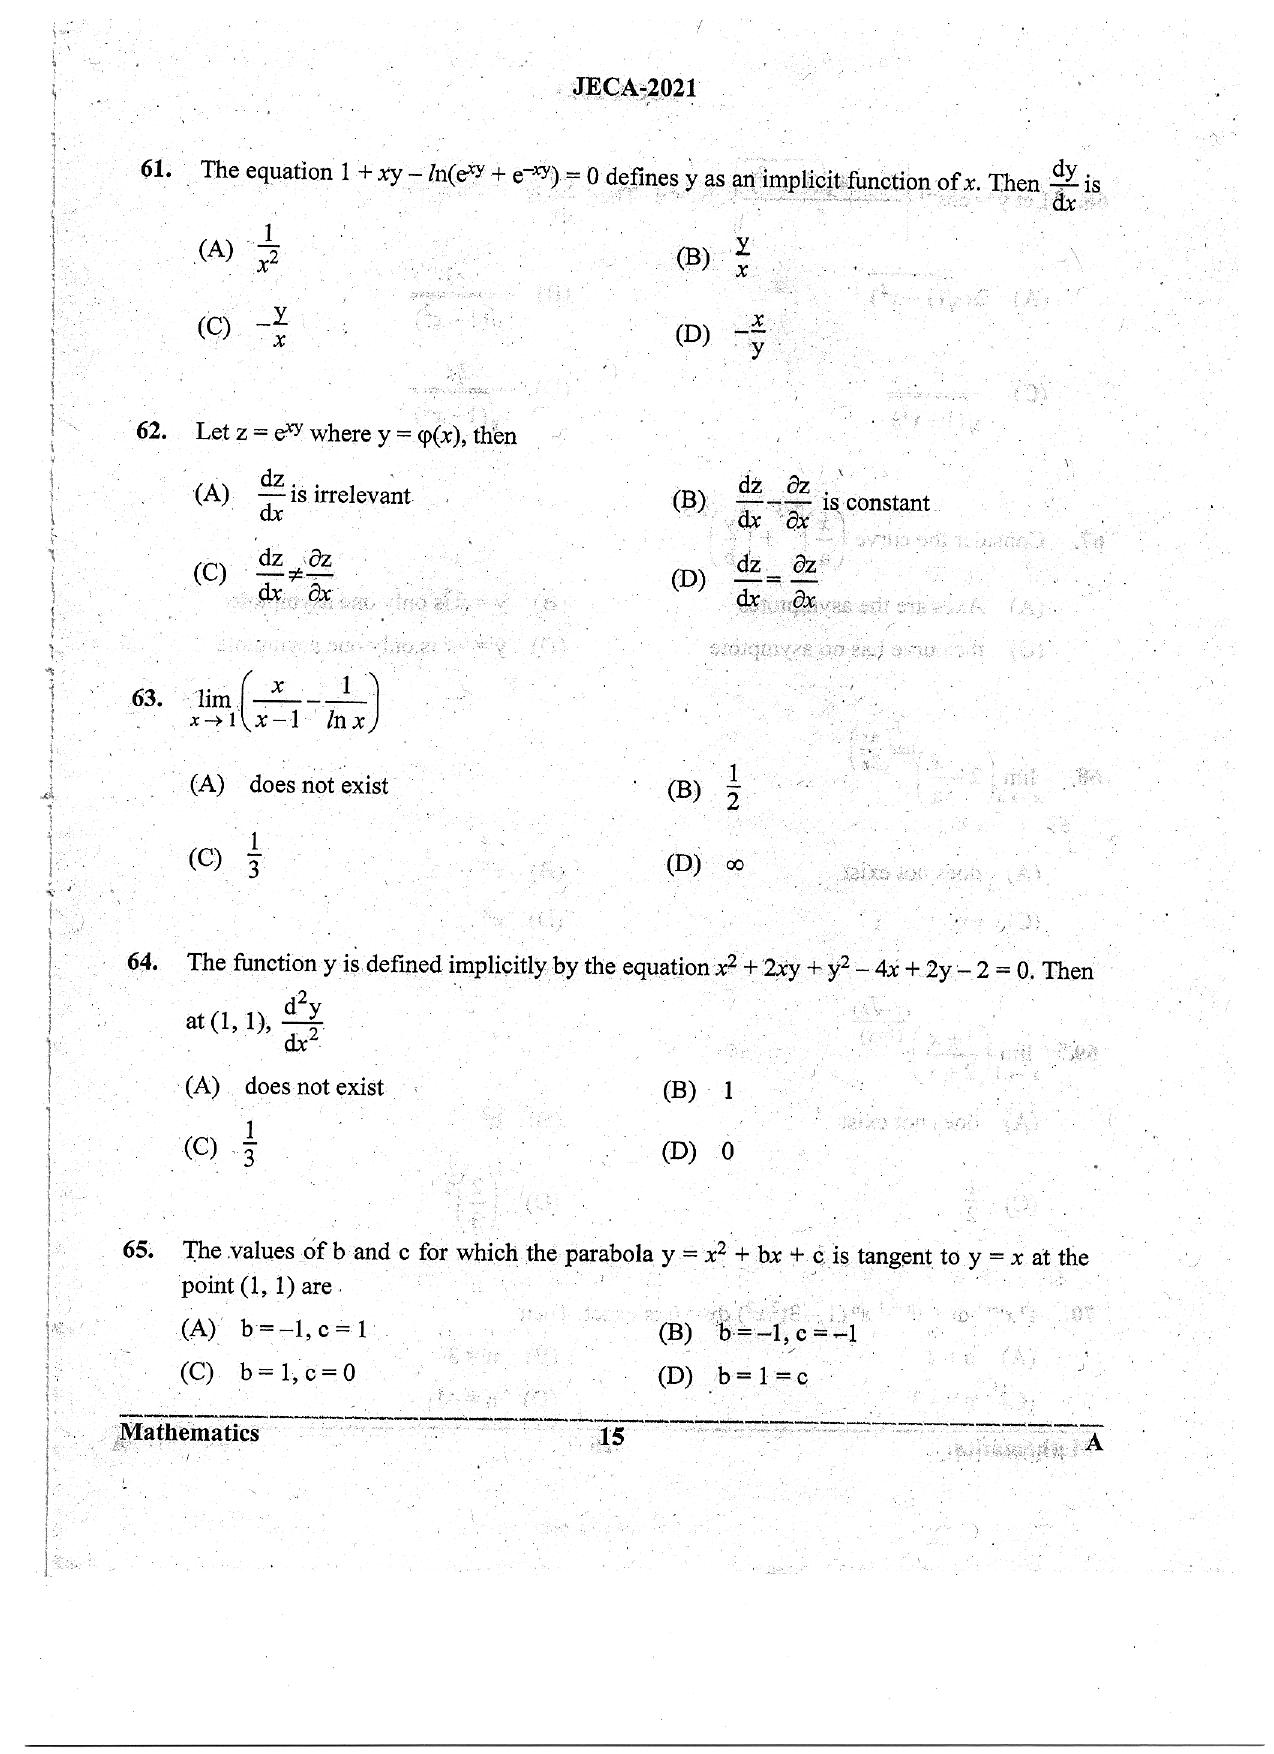 WB JECA 2021 Mathematics Question Paper - Page 15